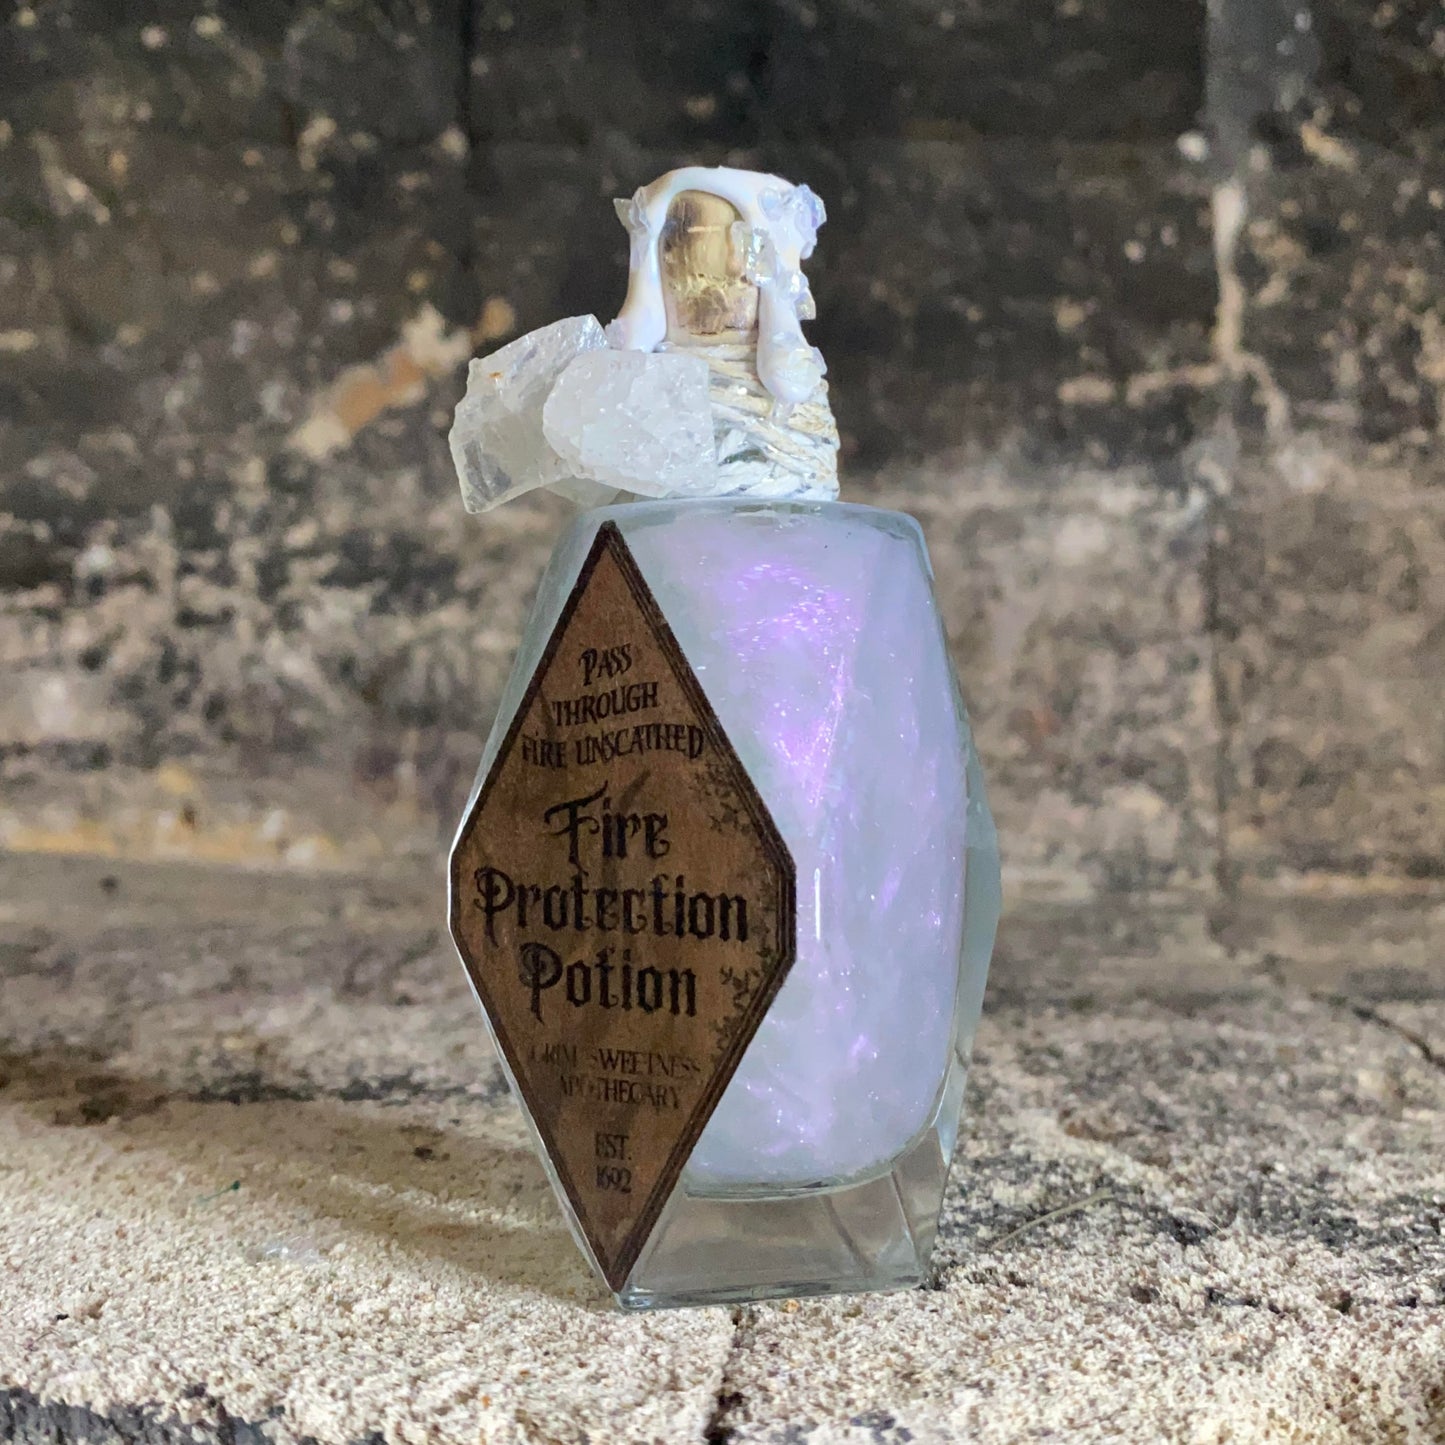 Fire Protection Potion, A Color Changing Potion Bottle Prop